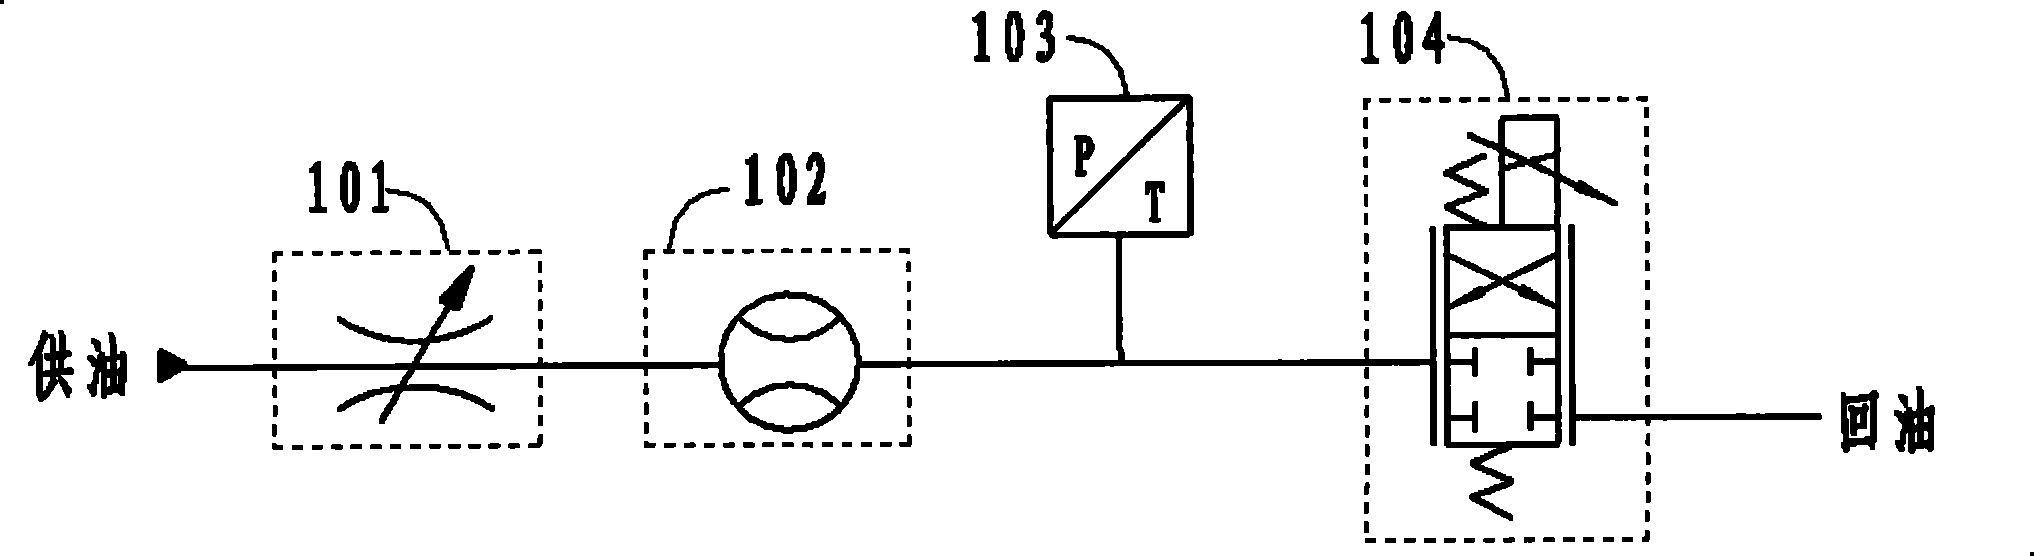 Model-based method for loading electro-hydraulic proportional valve